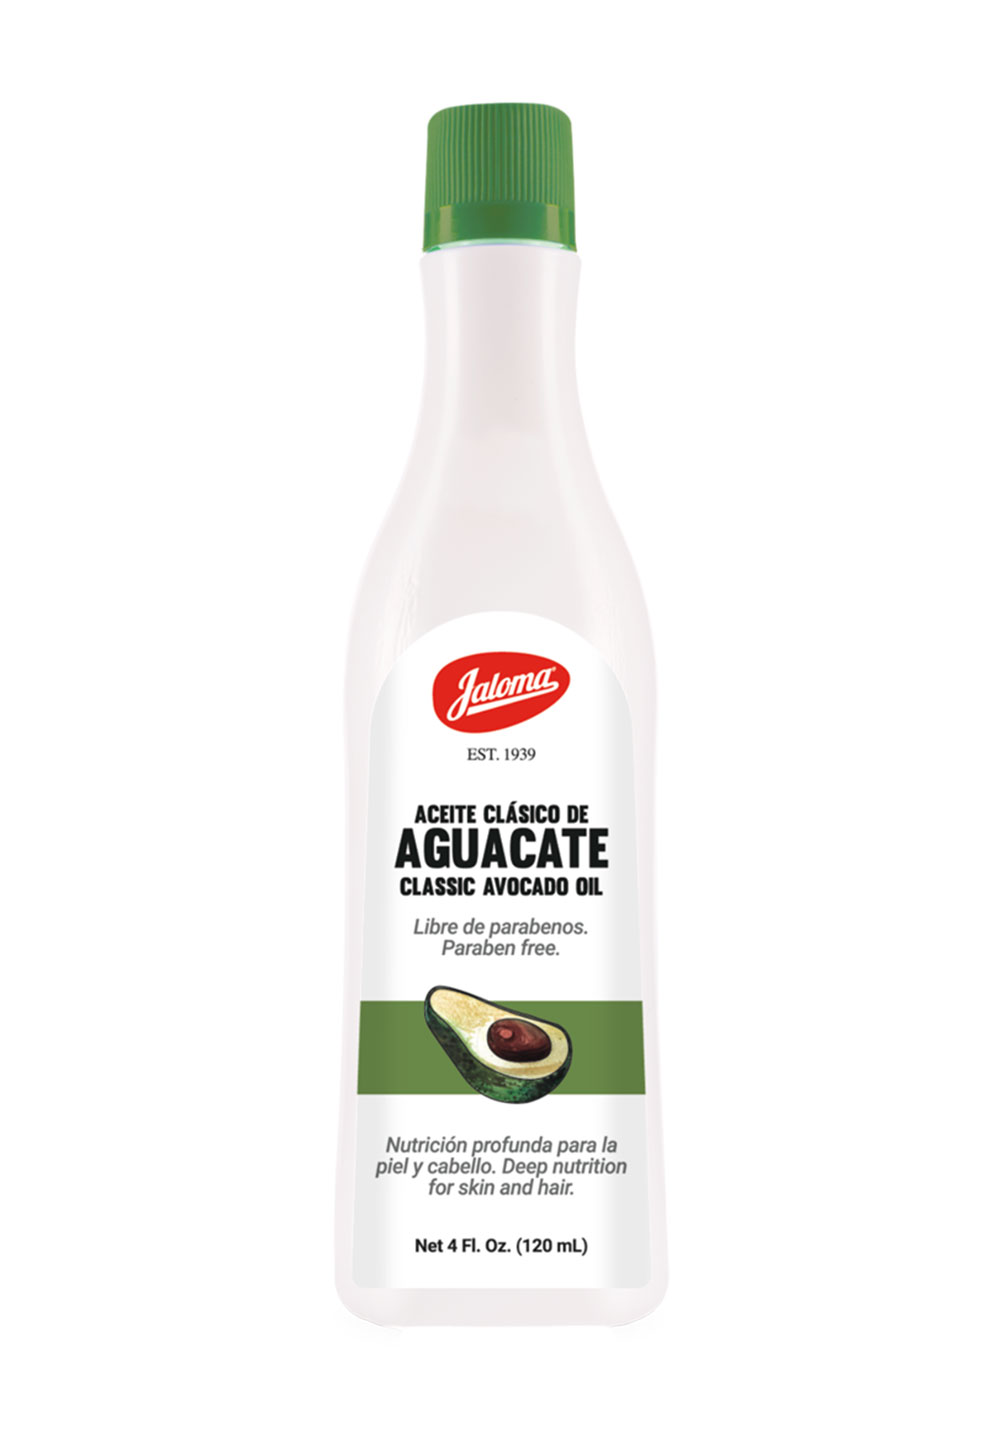 Aceite clásico de Aguacate, 120 ml. – Jaloma